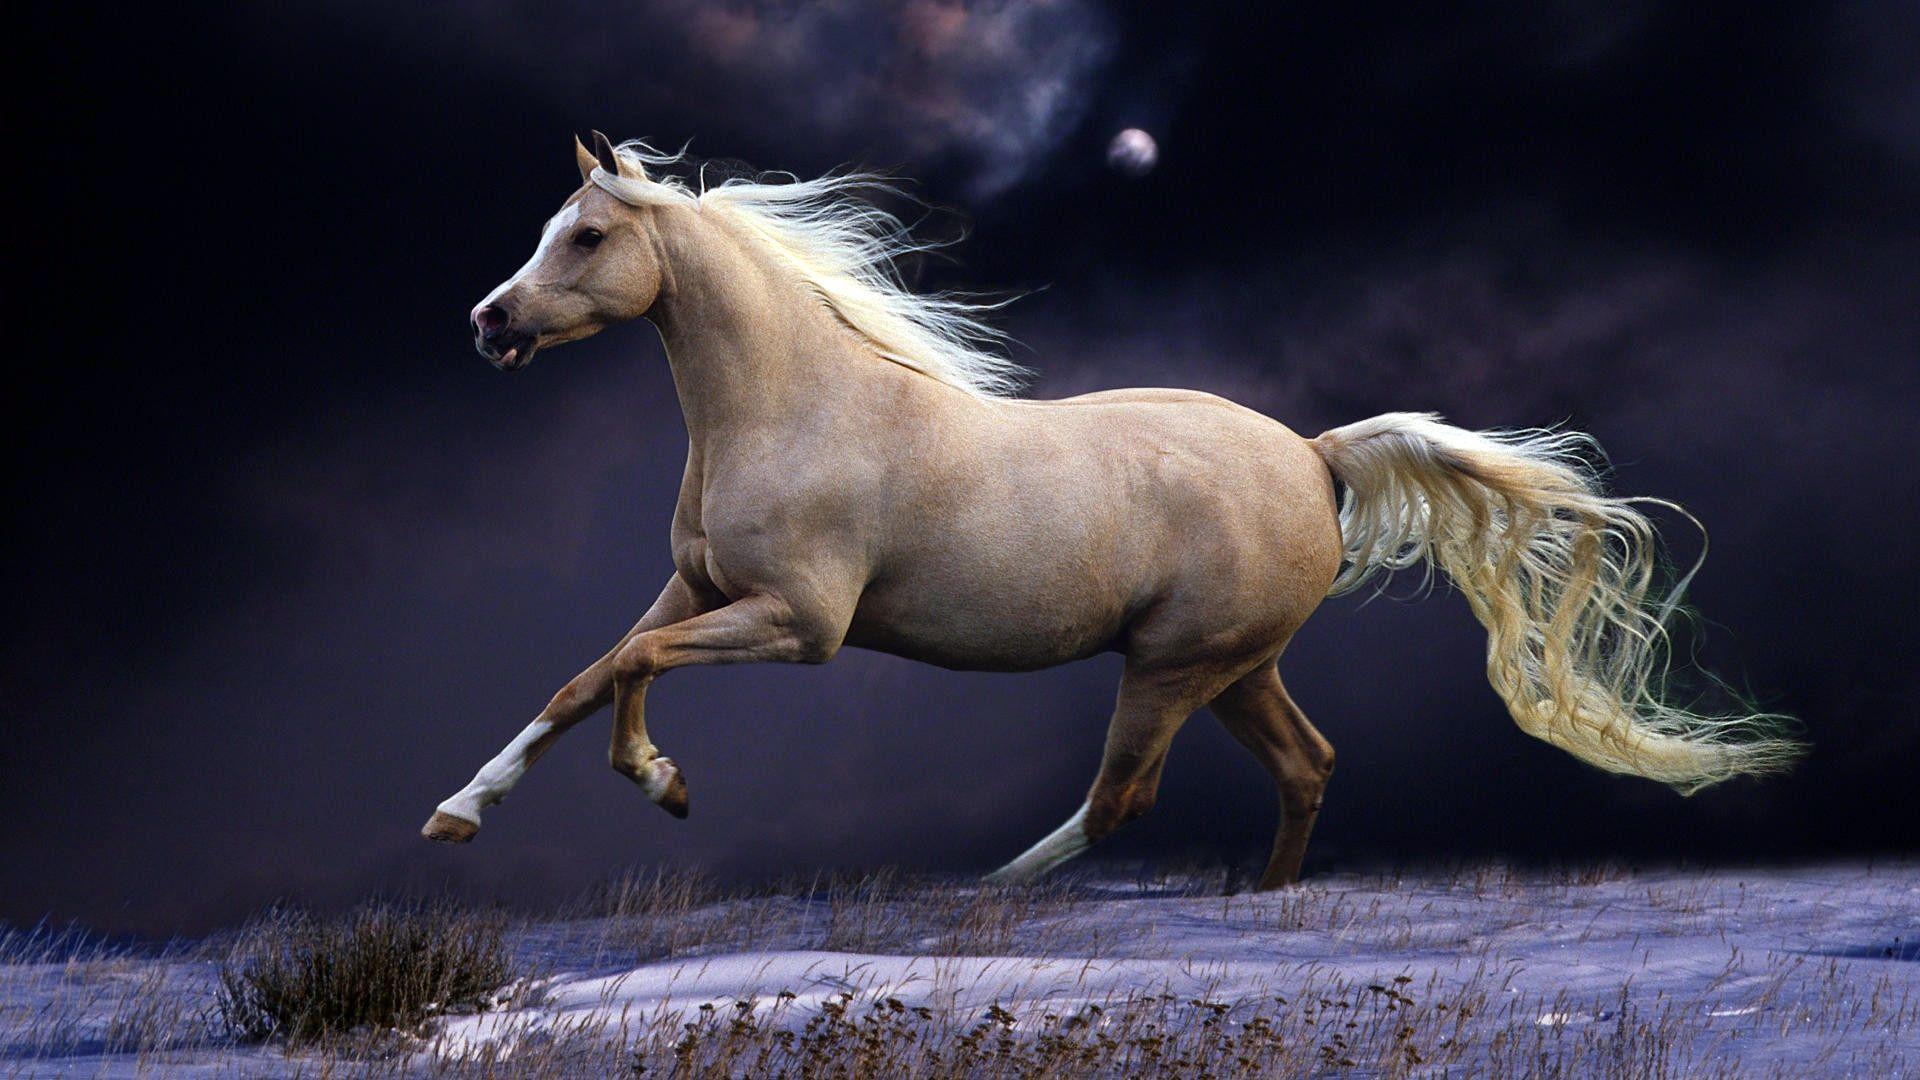 1080p Horse Wallpaper, 48 1080p Horse HD Wallpaper Background, W